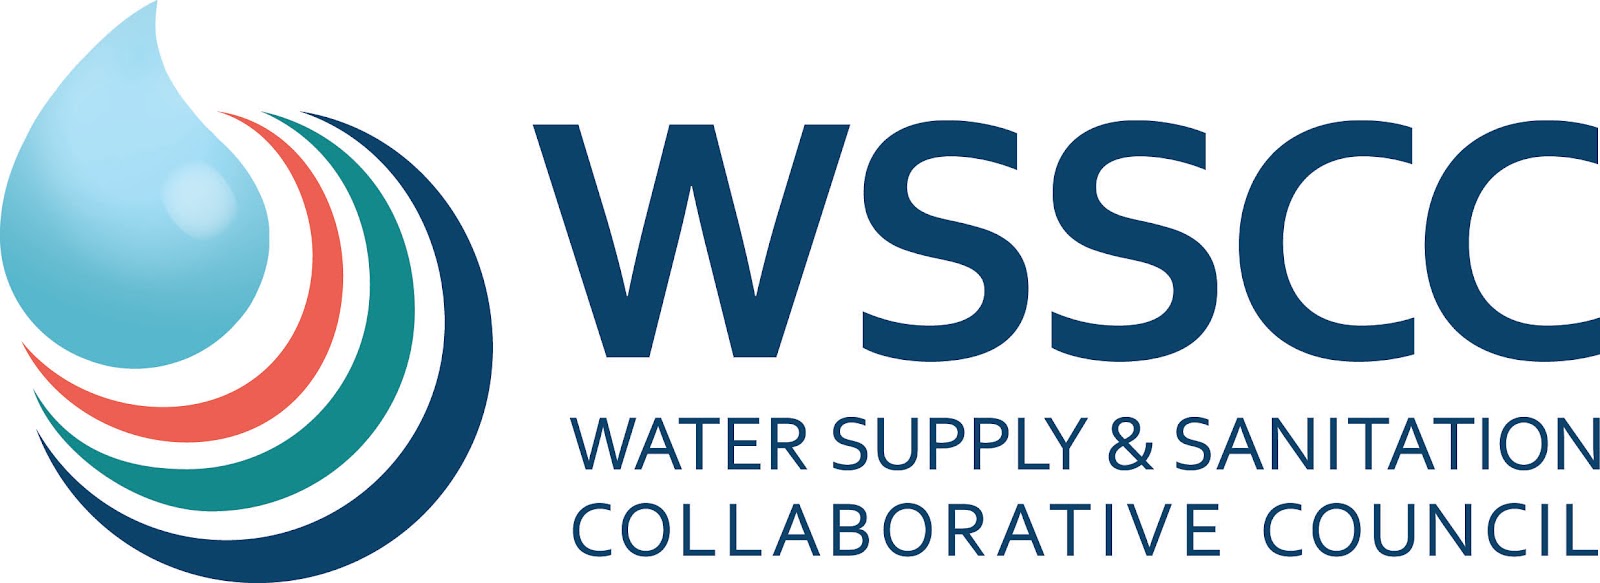 WSSCC_logo_CMYK.jpg